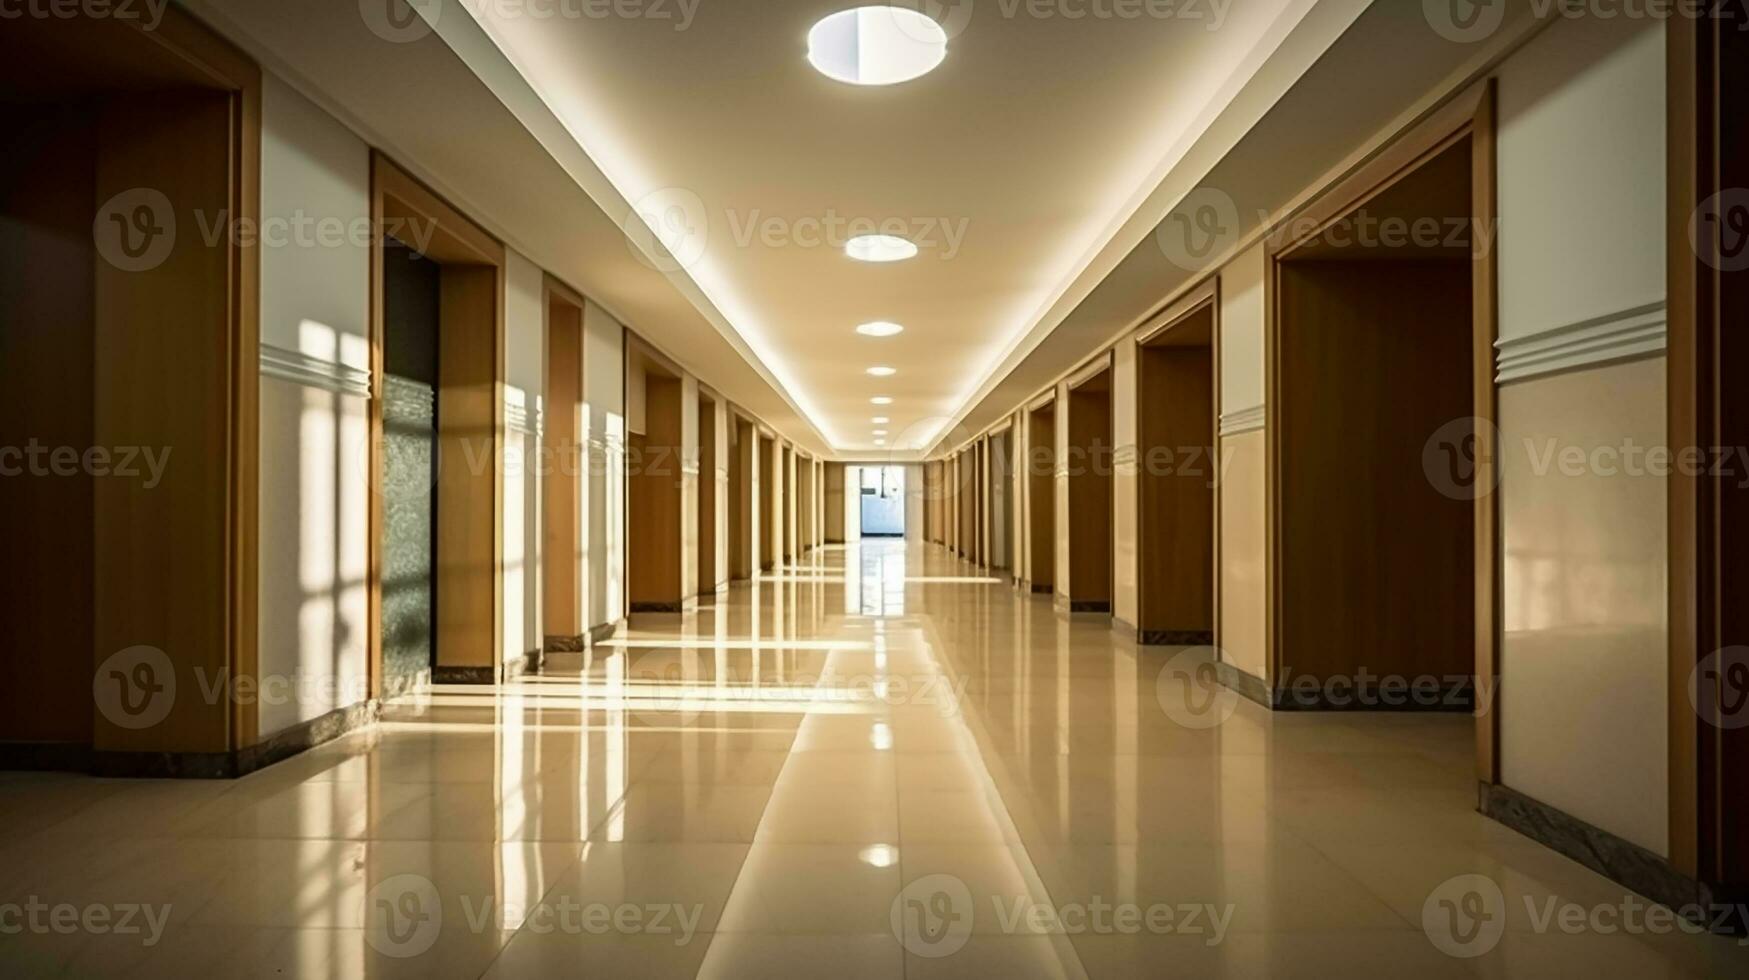 AI generated Empty corridorinterior view photo